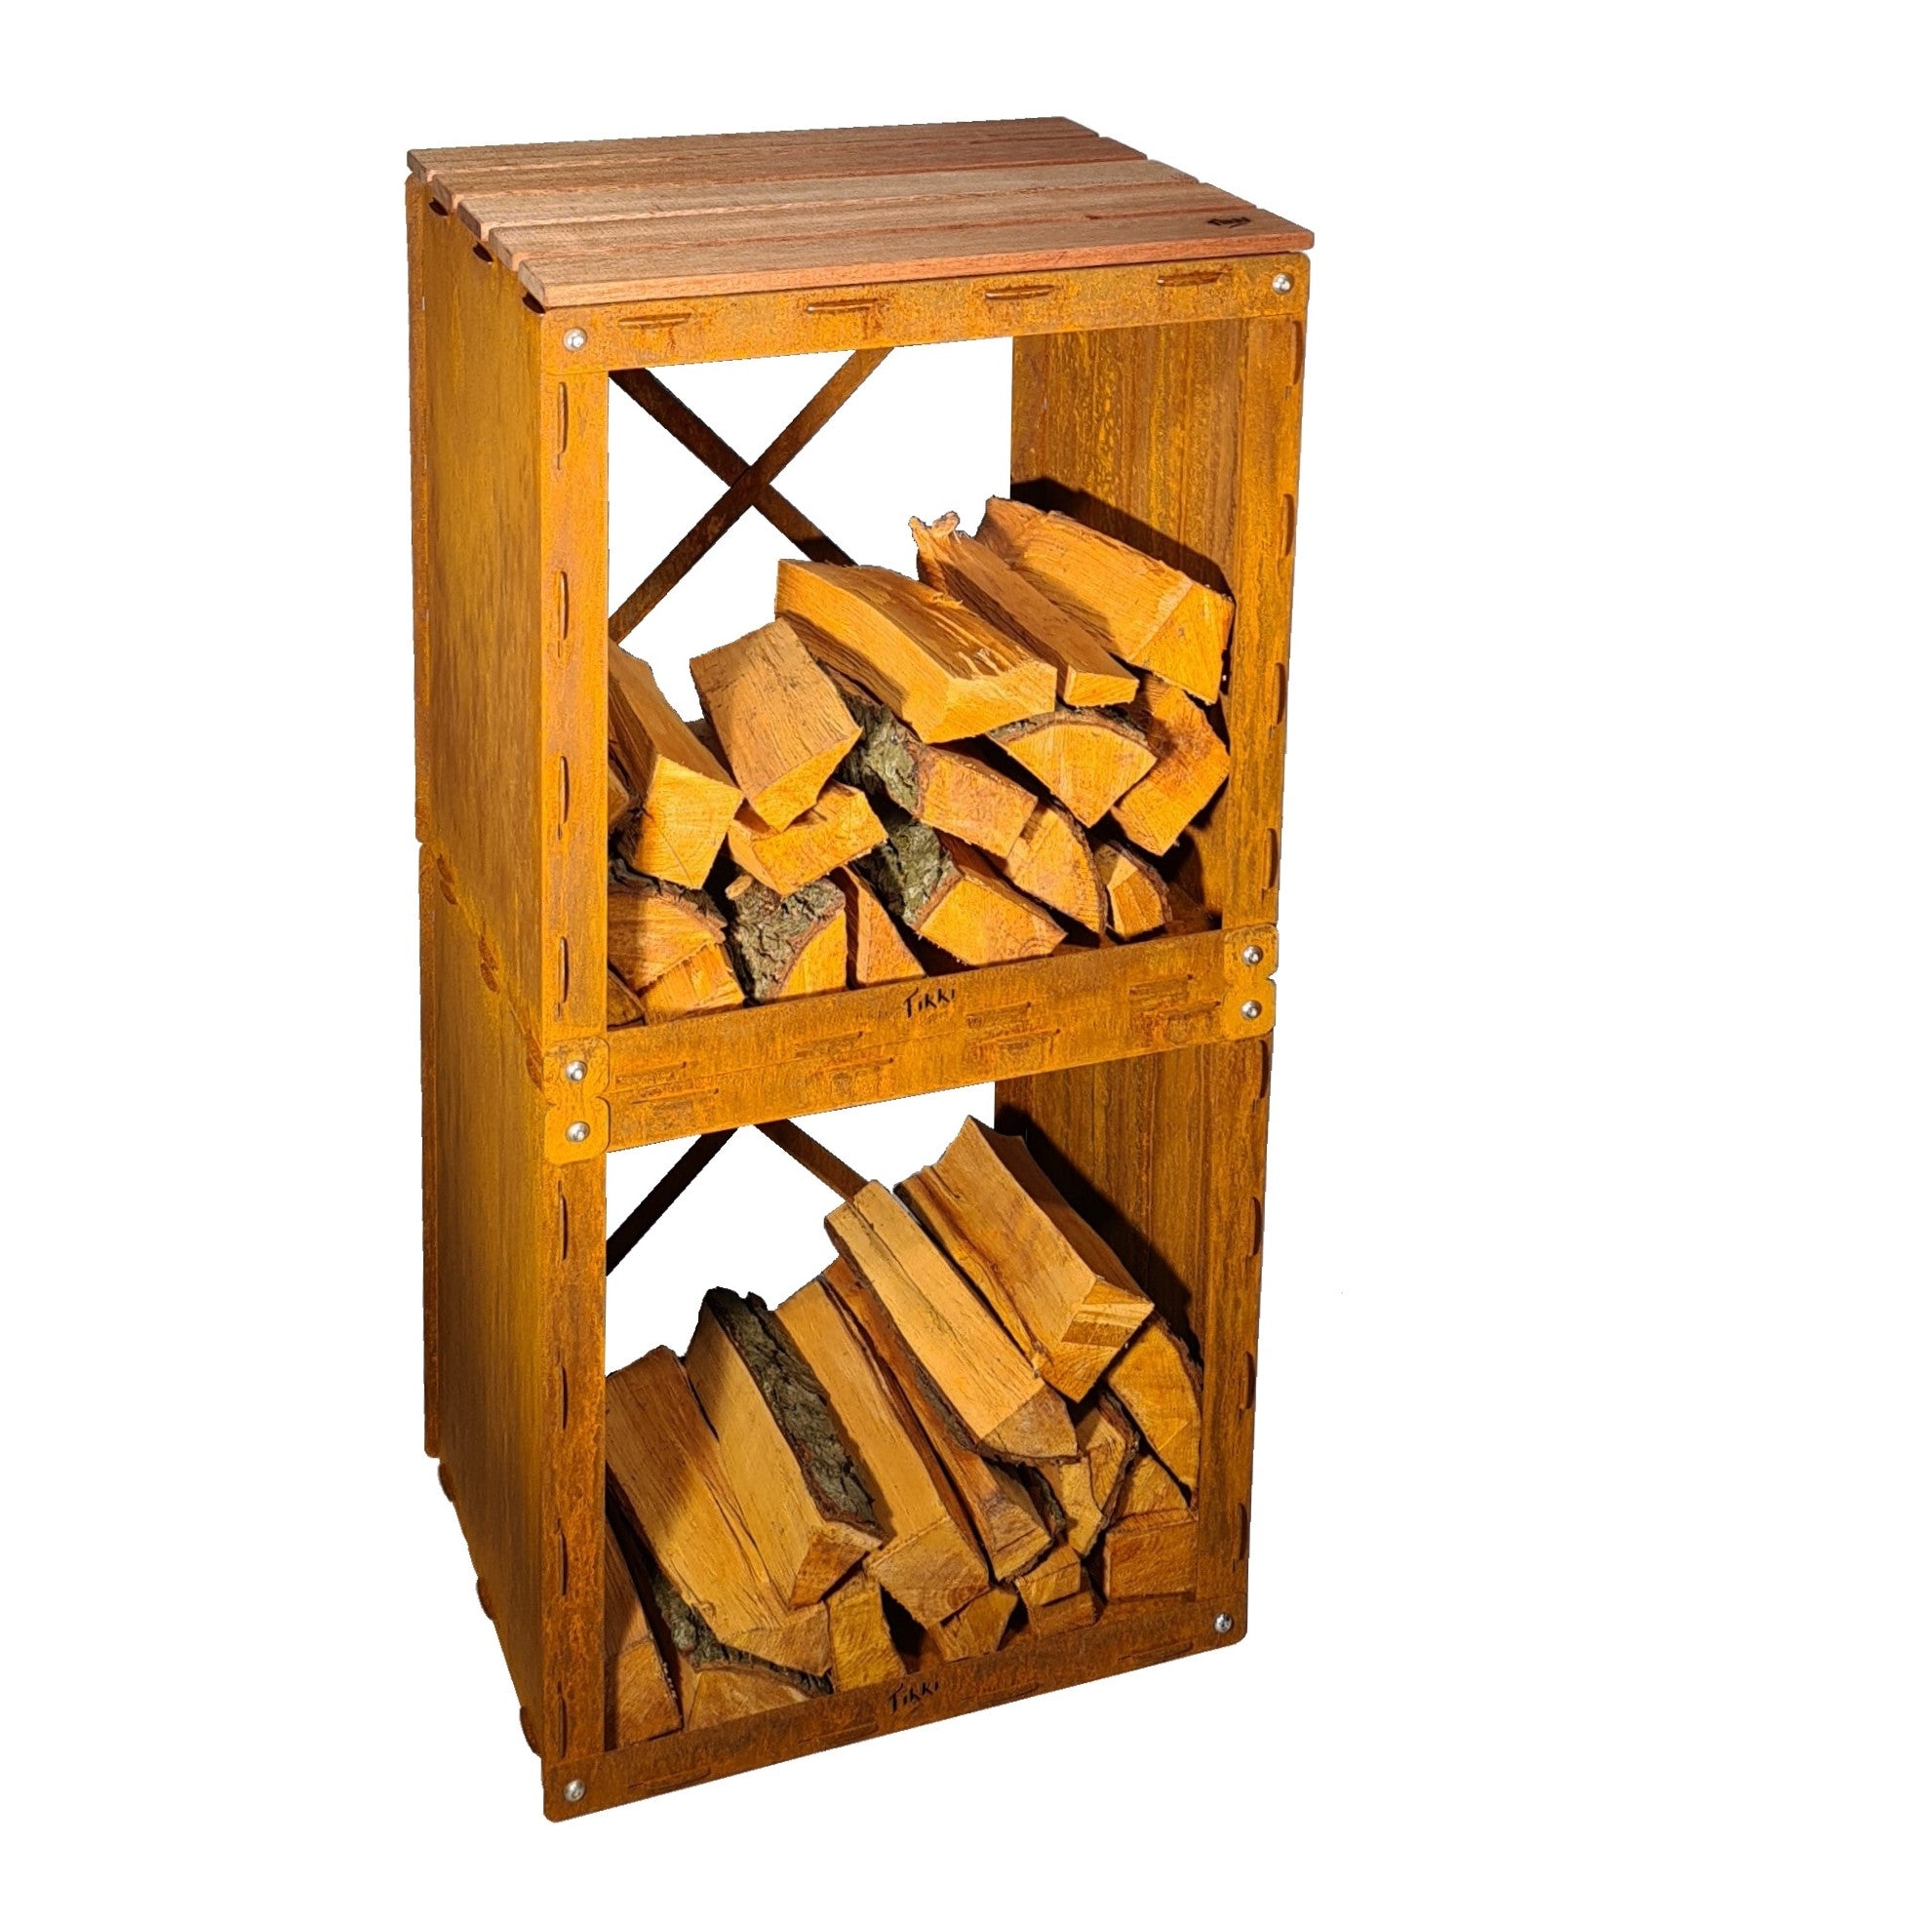 Fikki Wood Storage Box